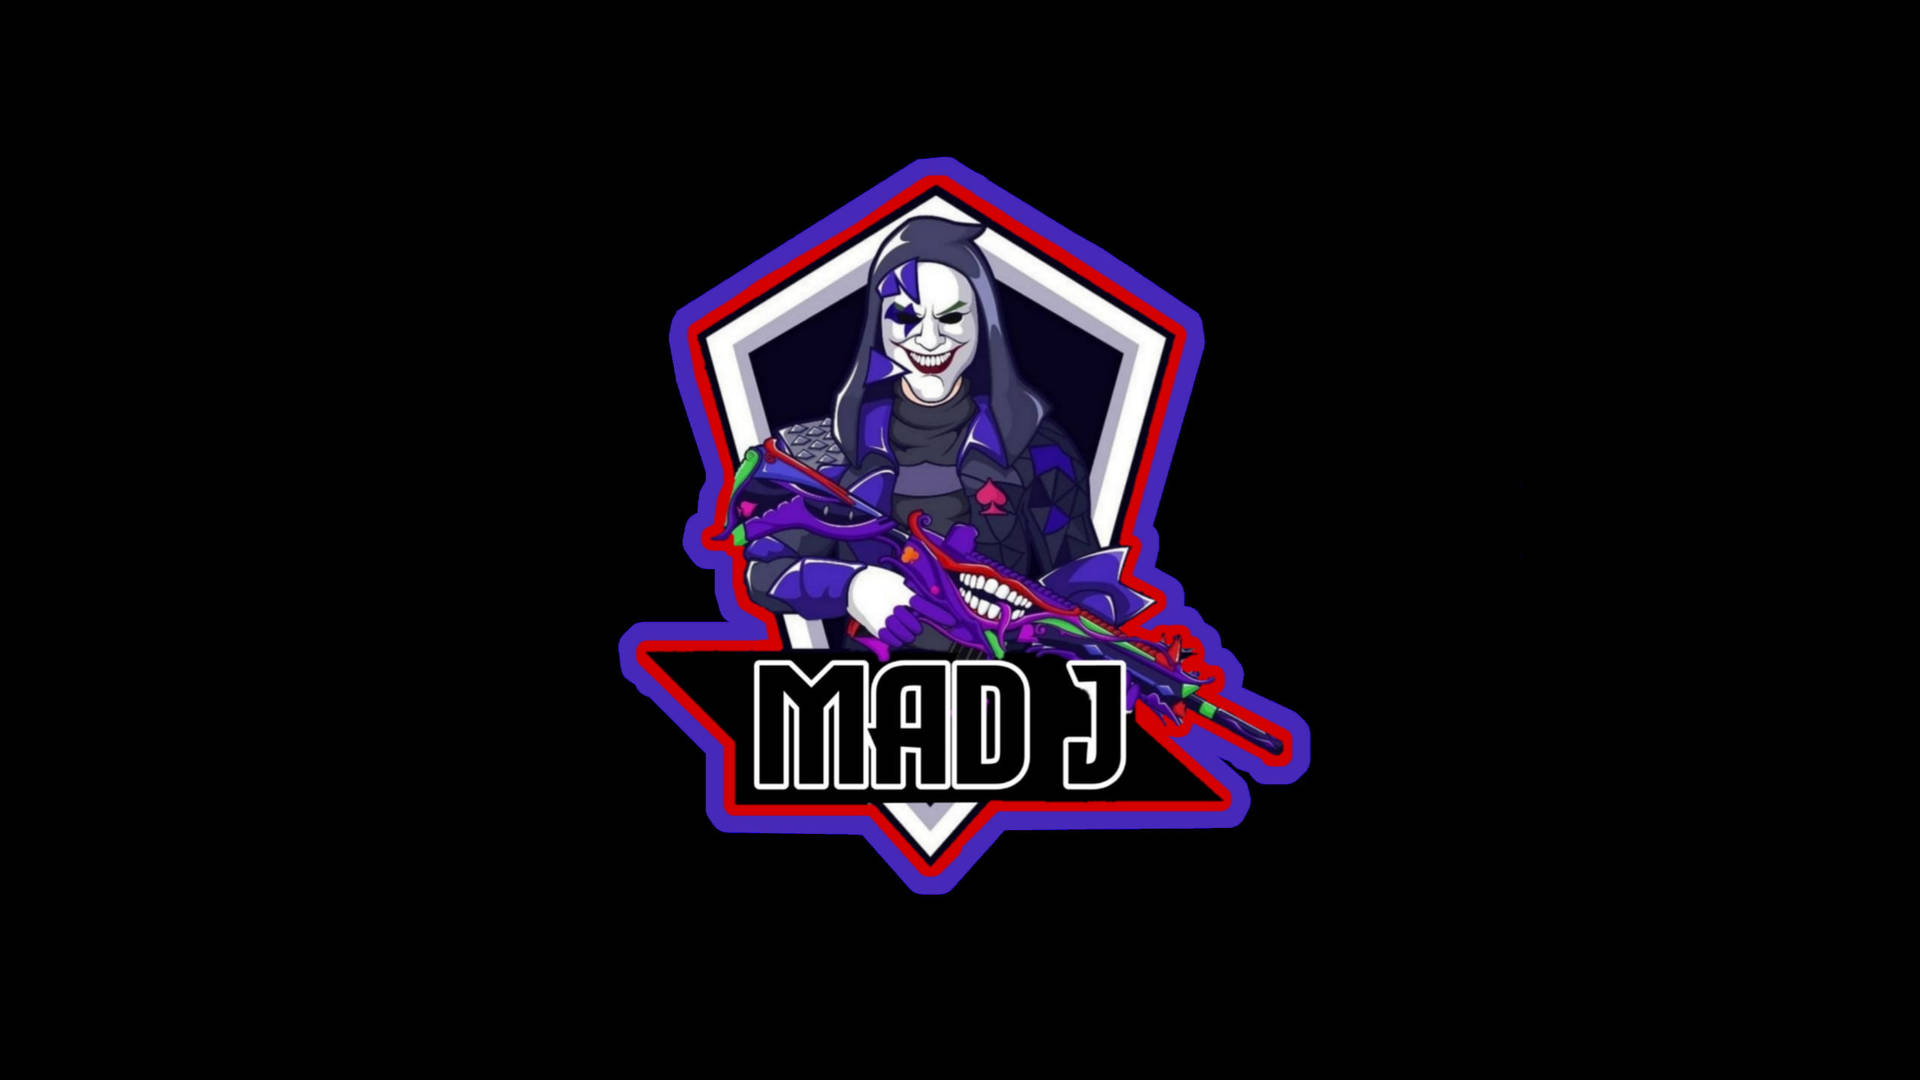 PUBG Mad J Gaming Logo Wallpaper